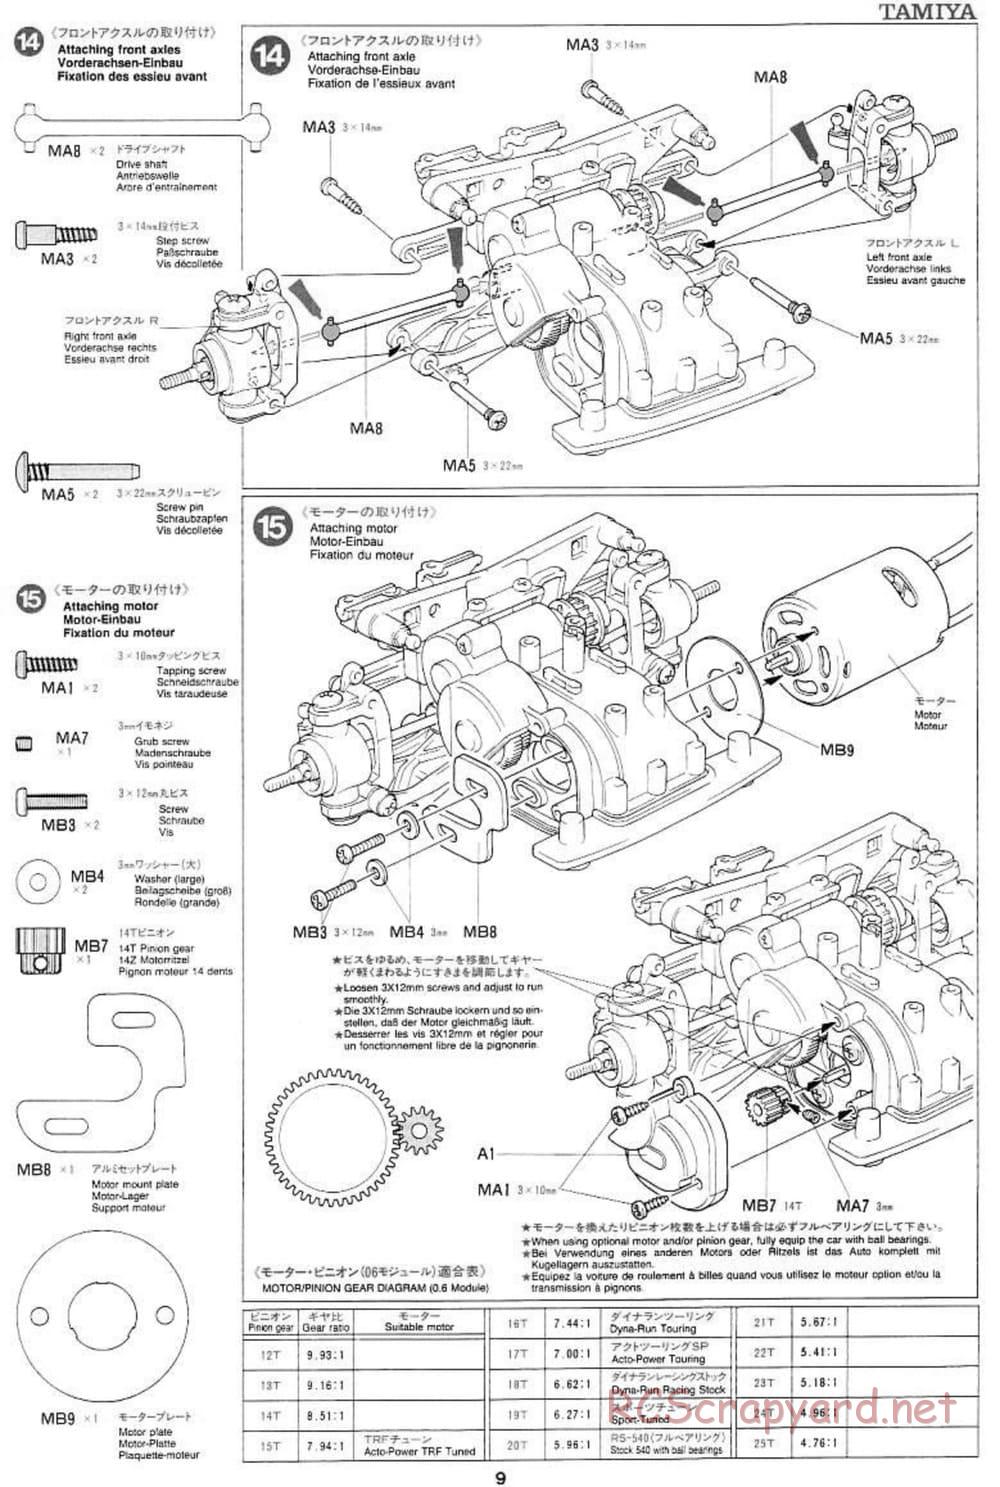 Tamiya - Toyota Corolla WRC - TA-03FS Chassis - Manual - Page 9